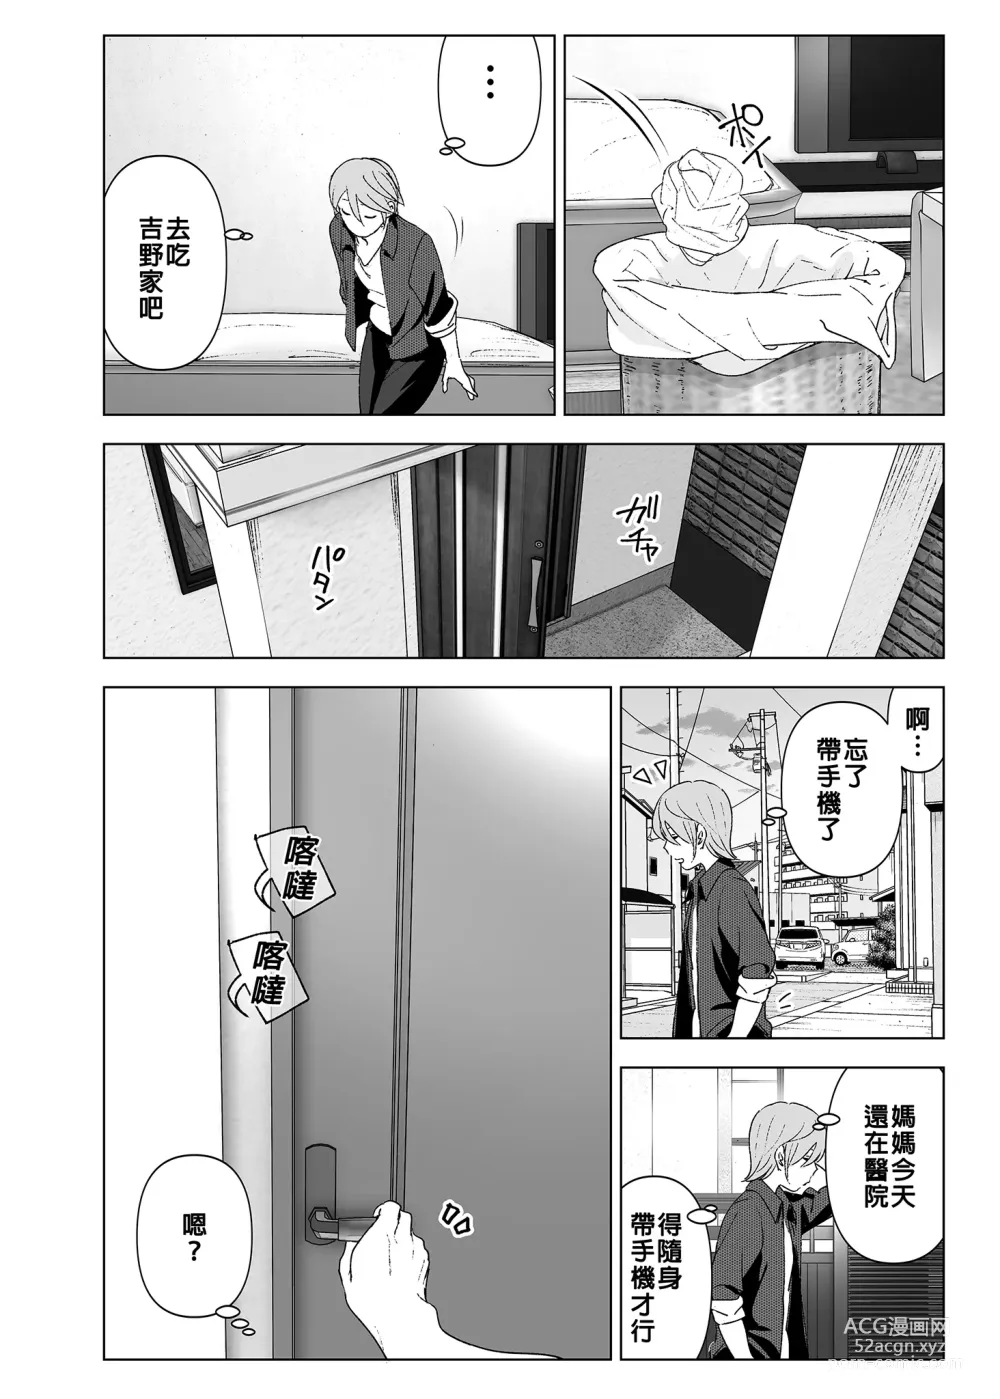 Page 13 of doujinshi 以前明明那麼可愛 (decensored)